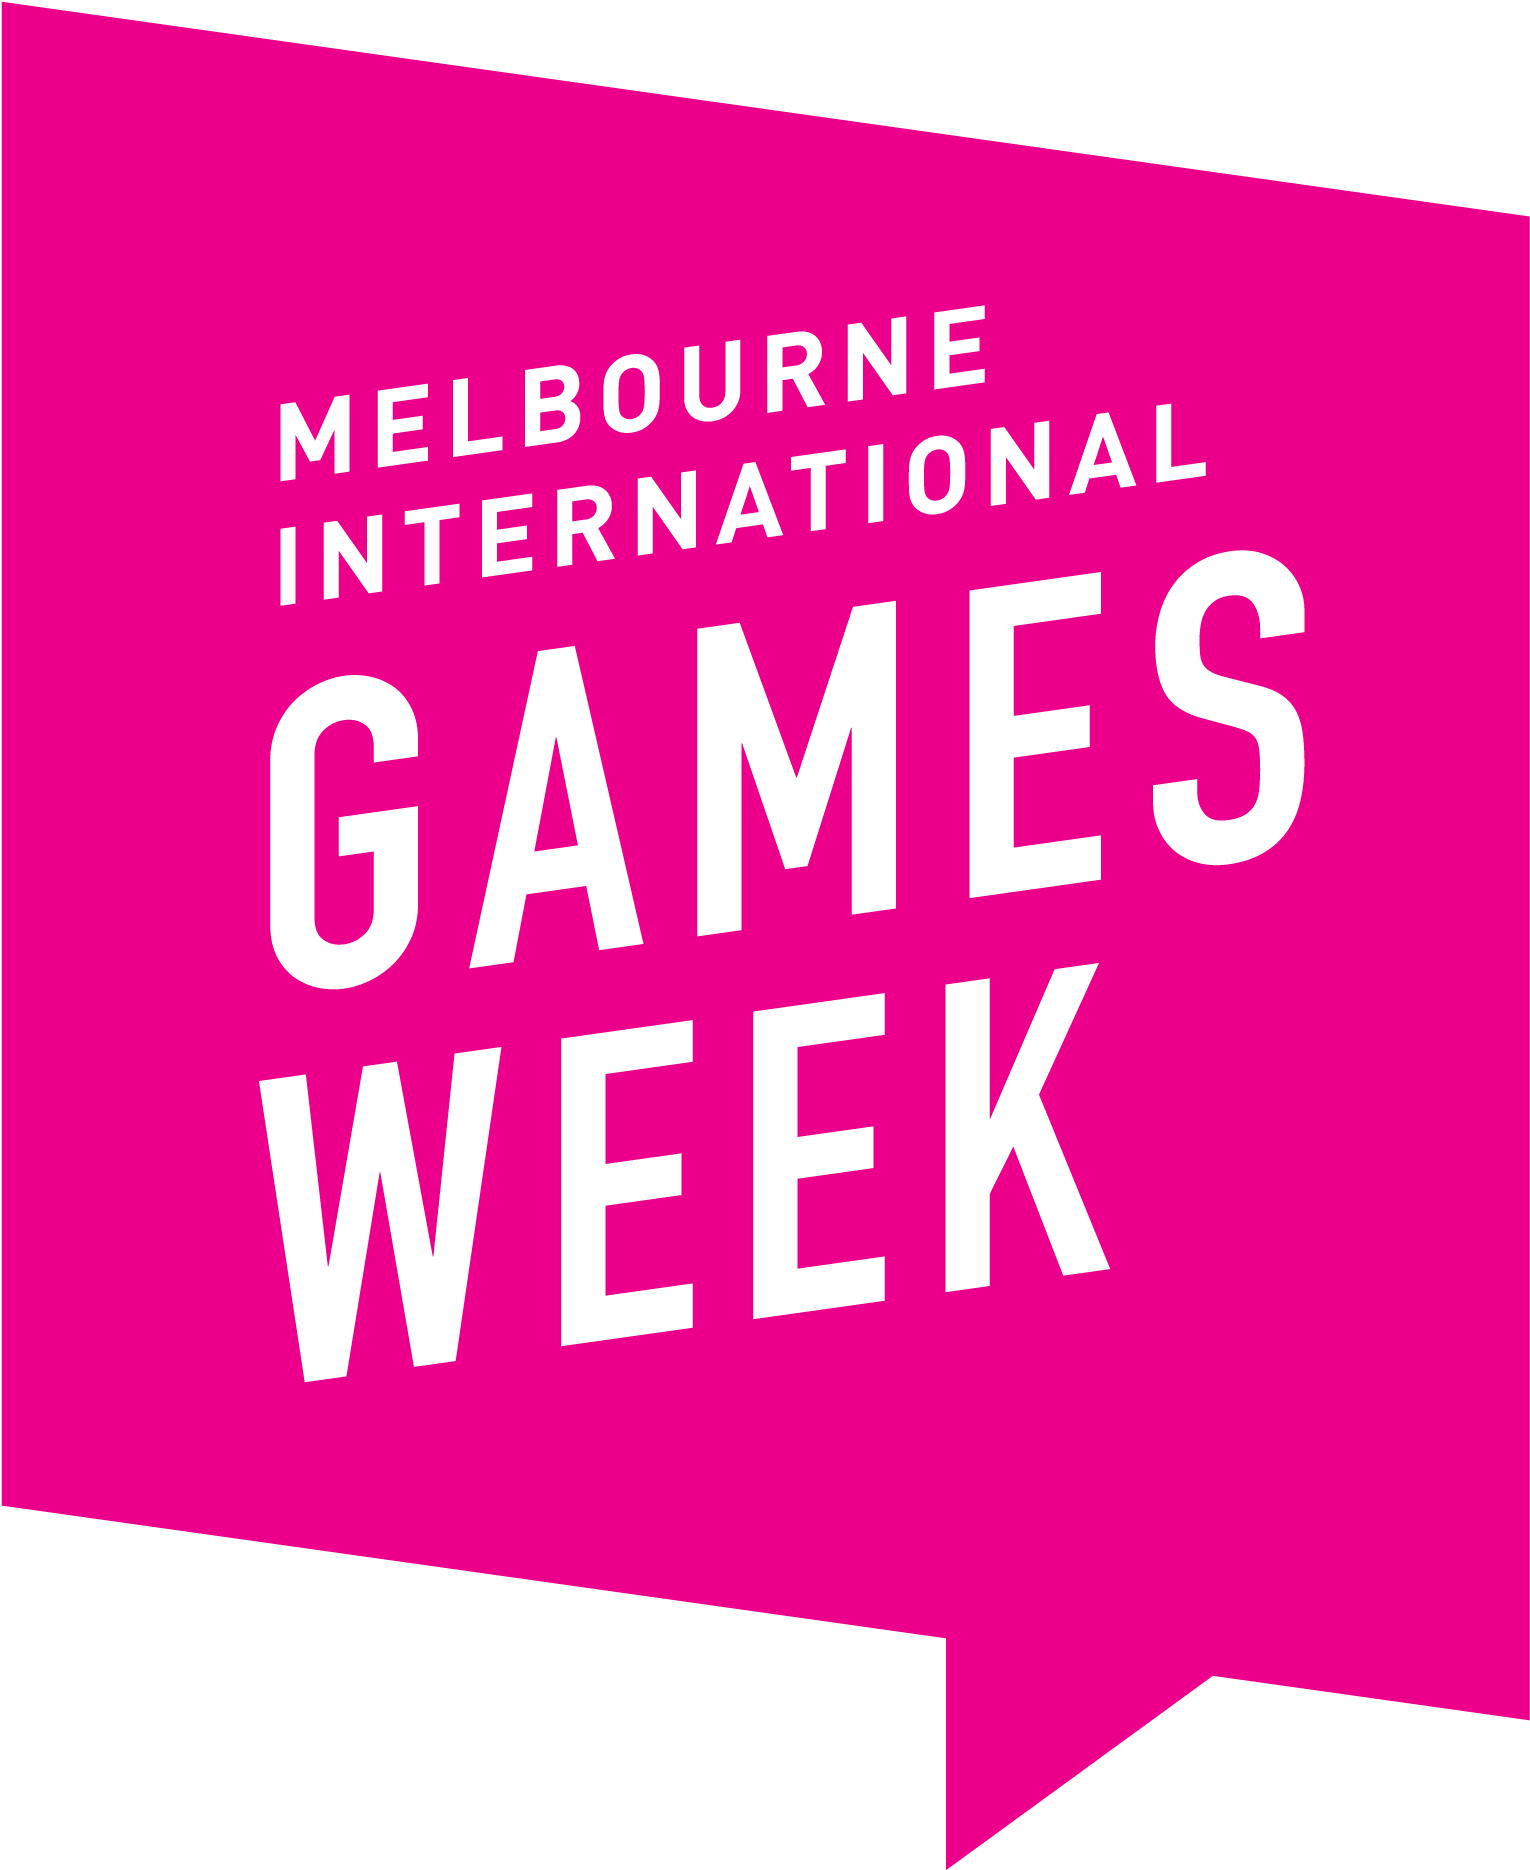 Melbourne International Games Week - Clothing (2164x2497)